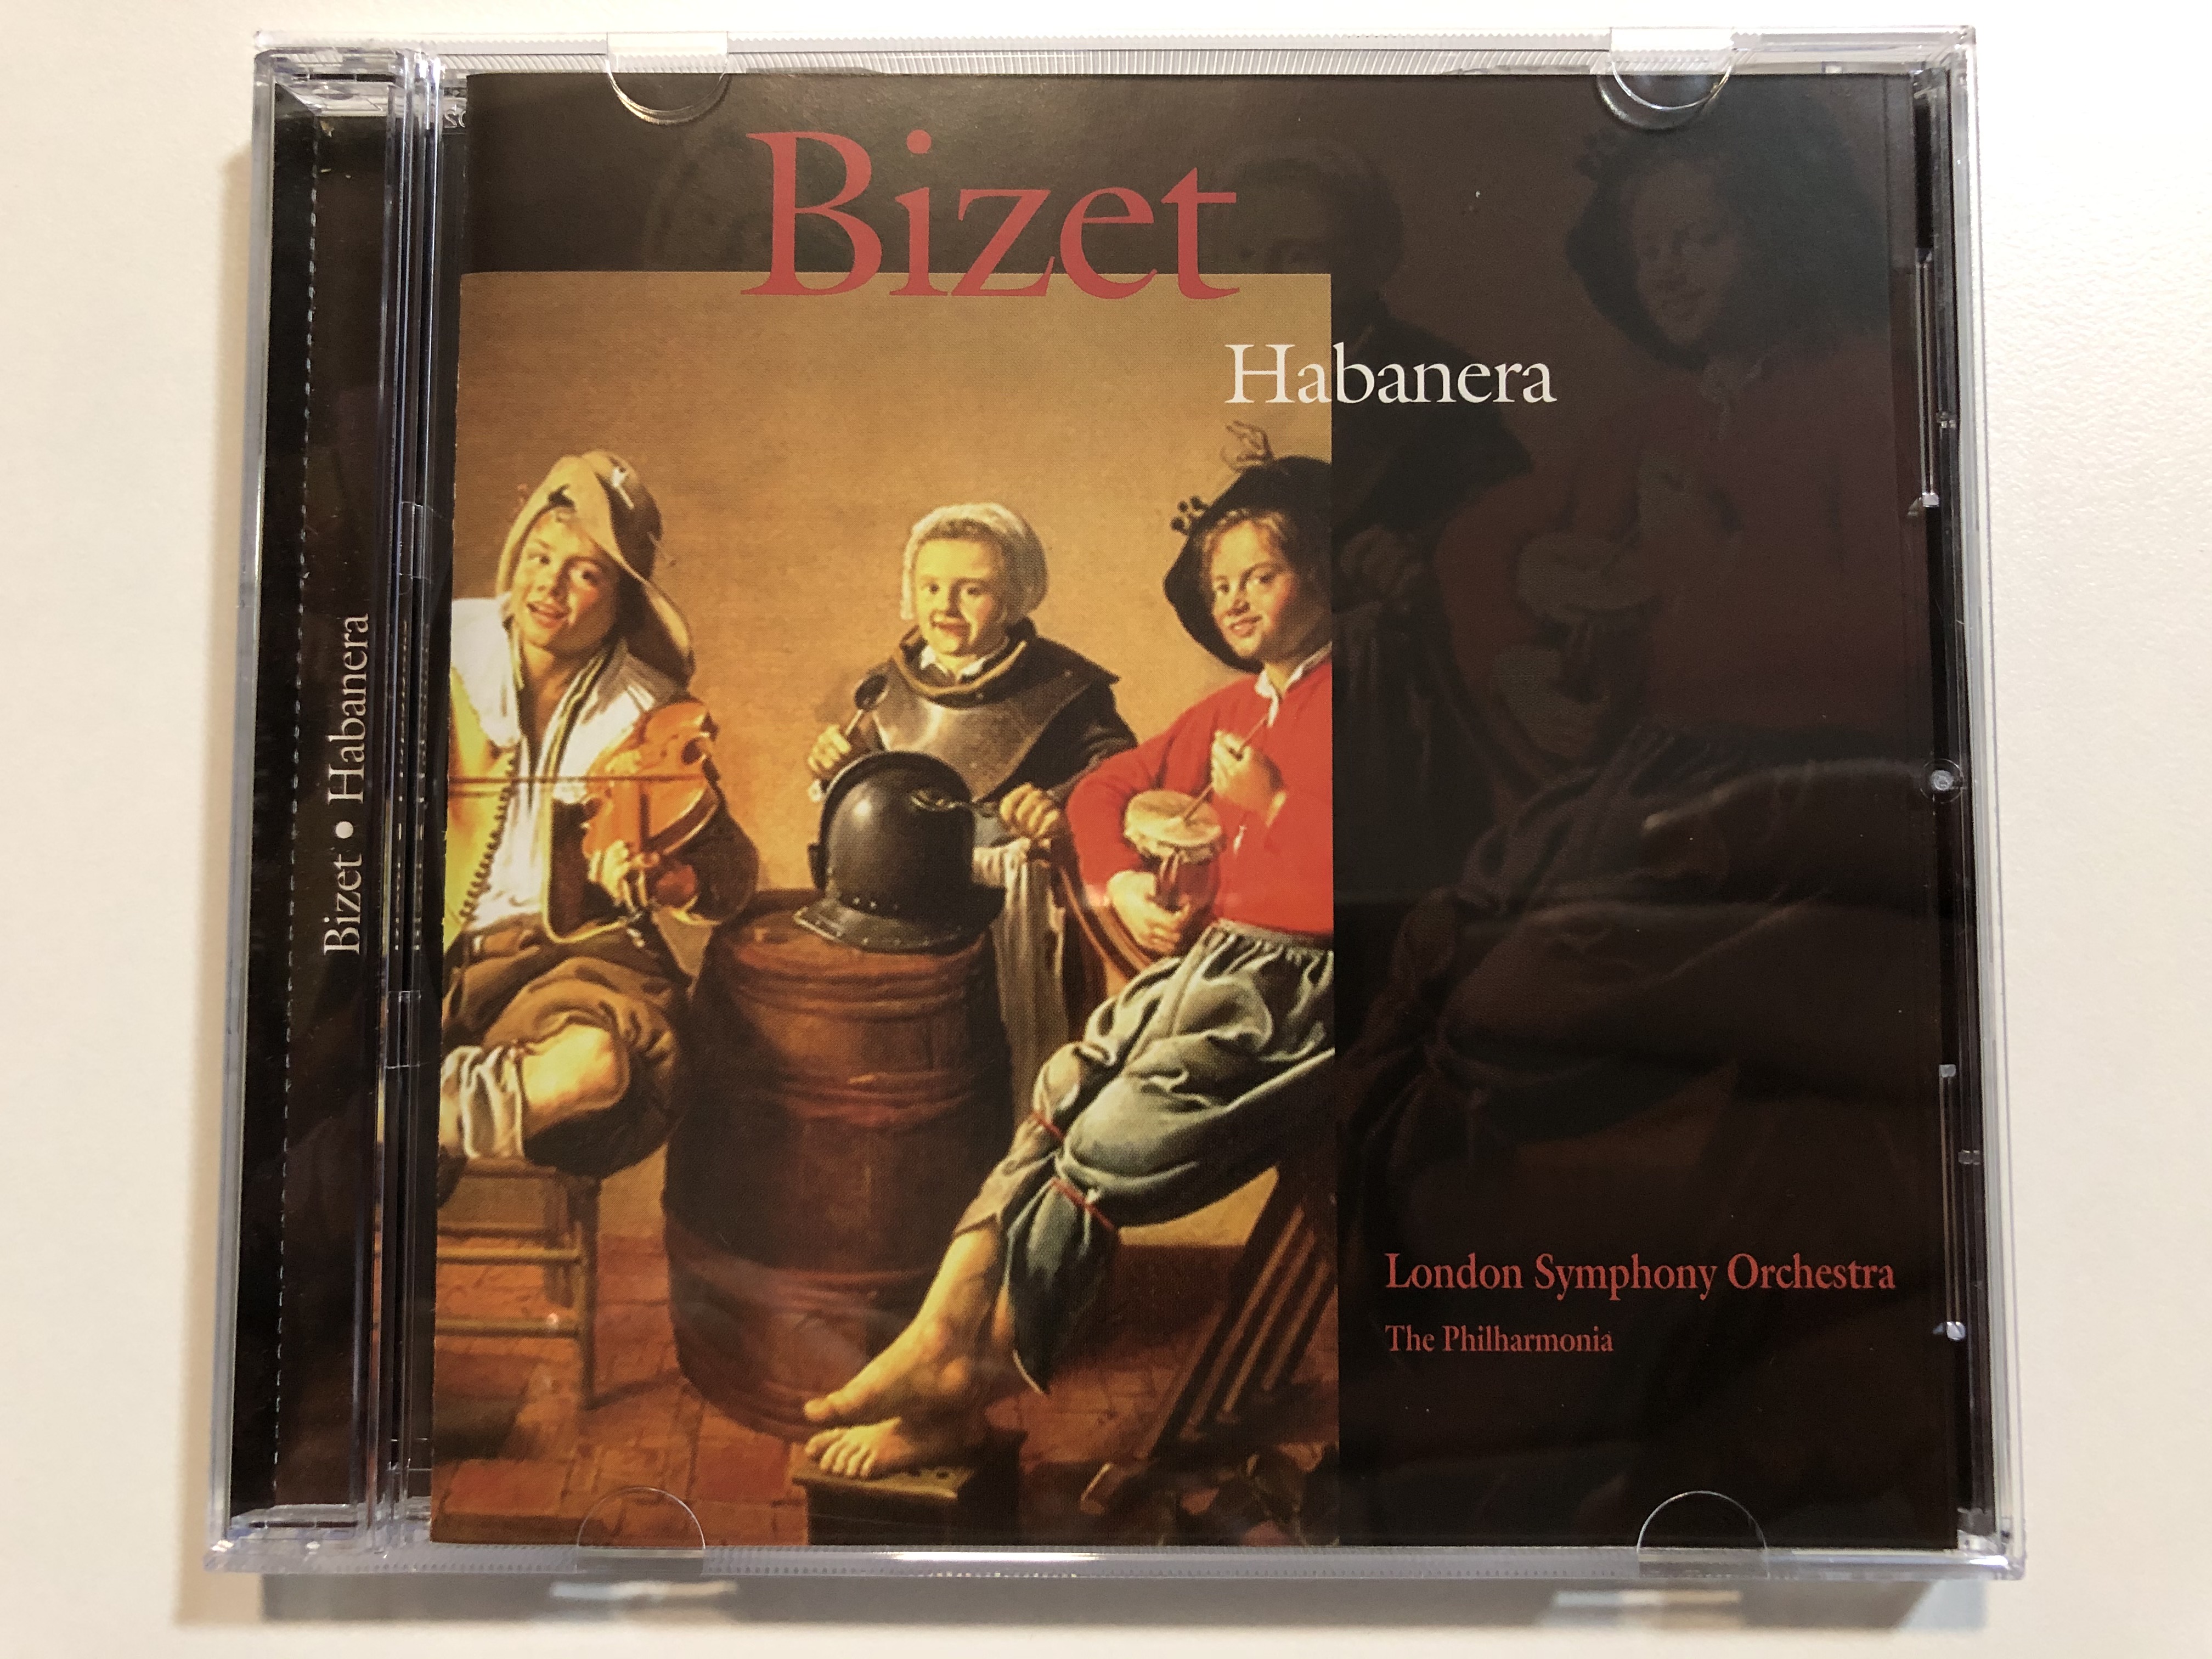 bizet-habanera-london-symphony-orchestra-the-philharmonia-a-play-classics-audio-cd-1996-9024-2-1-.jpg